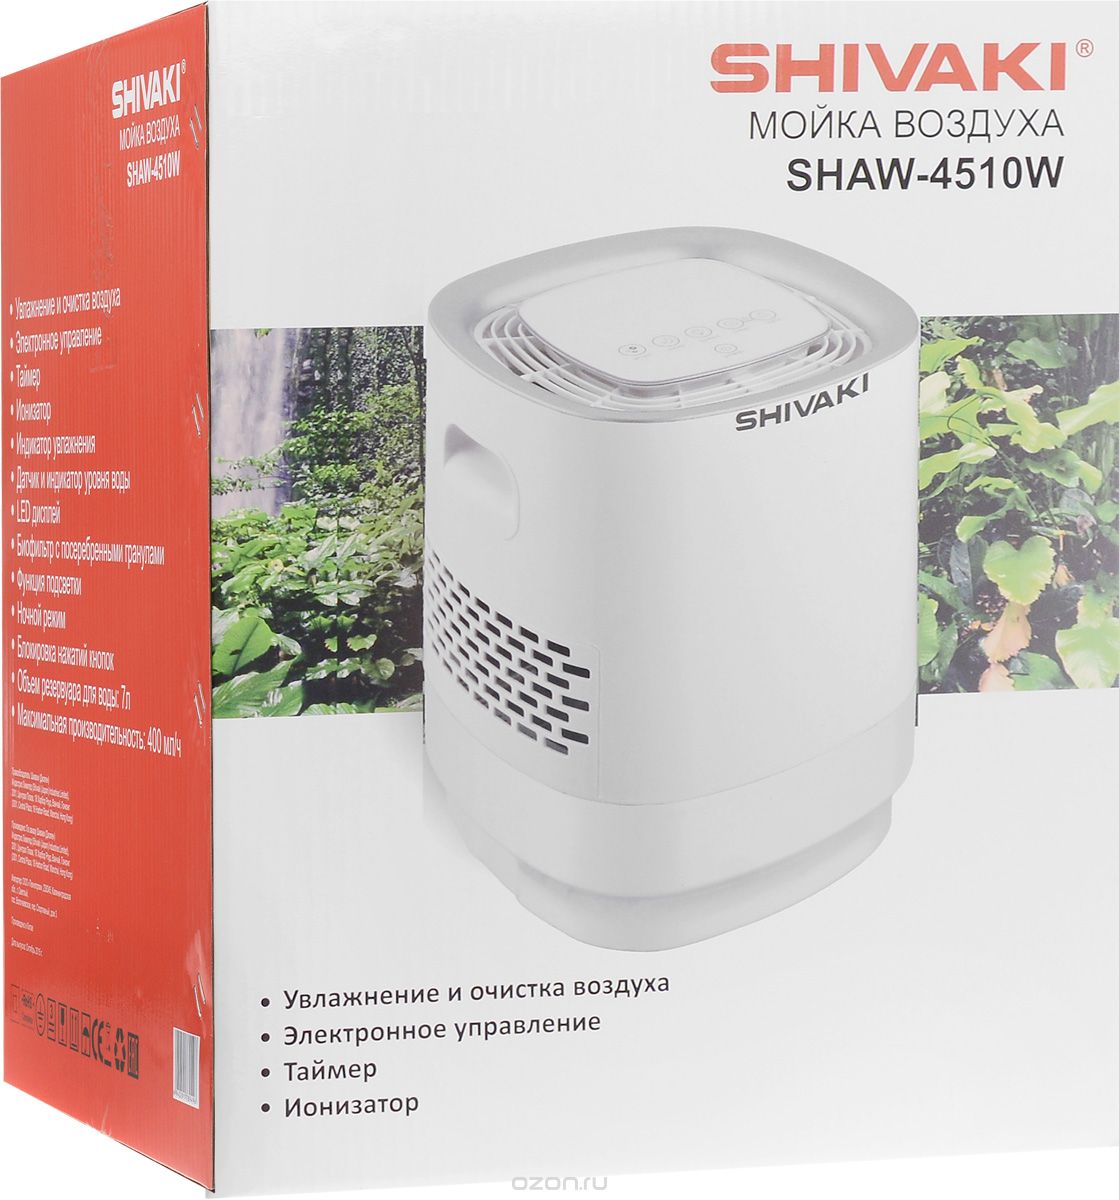 Shivaki SHAW-4510W  